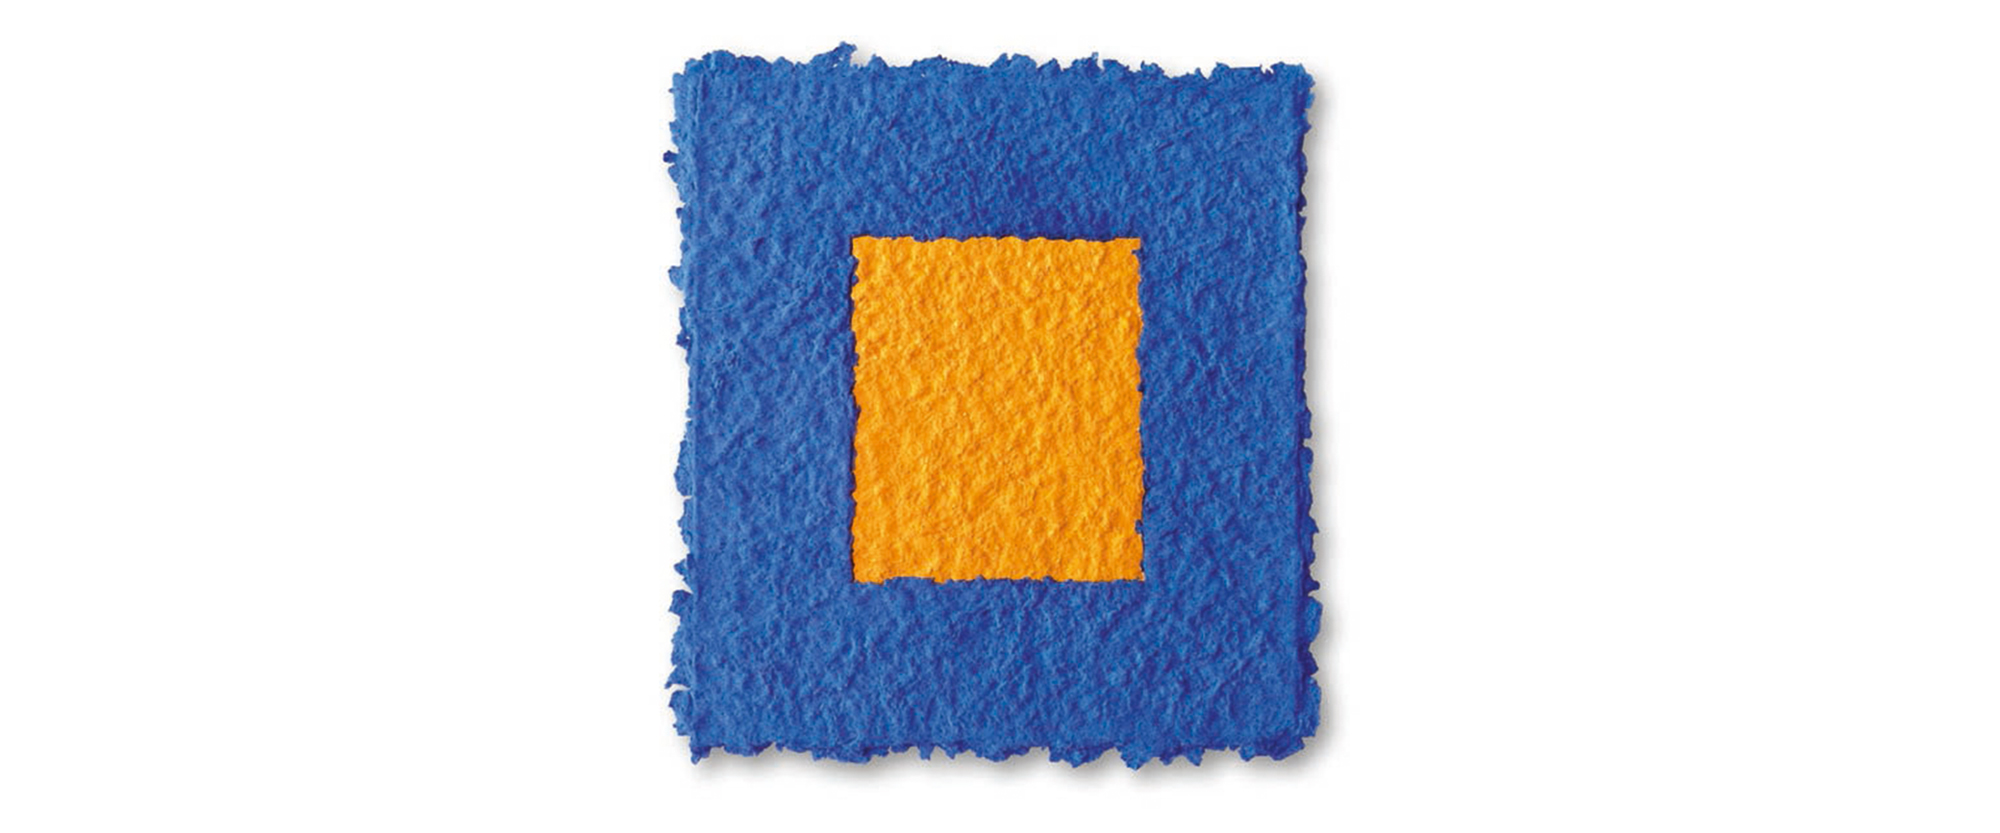 Oltre il blu # 1222 - 2012, Lapislazuli, Auripigment, Zellulose auf Holz, 39 x 35,5 cm, gerahmt 57 x 55 cm